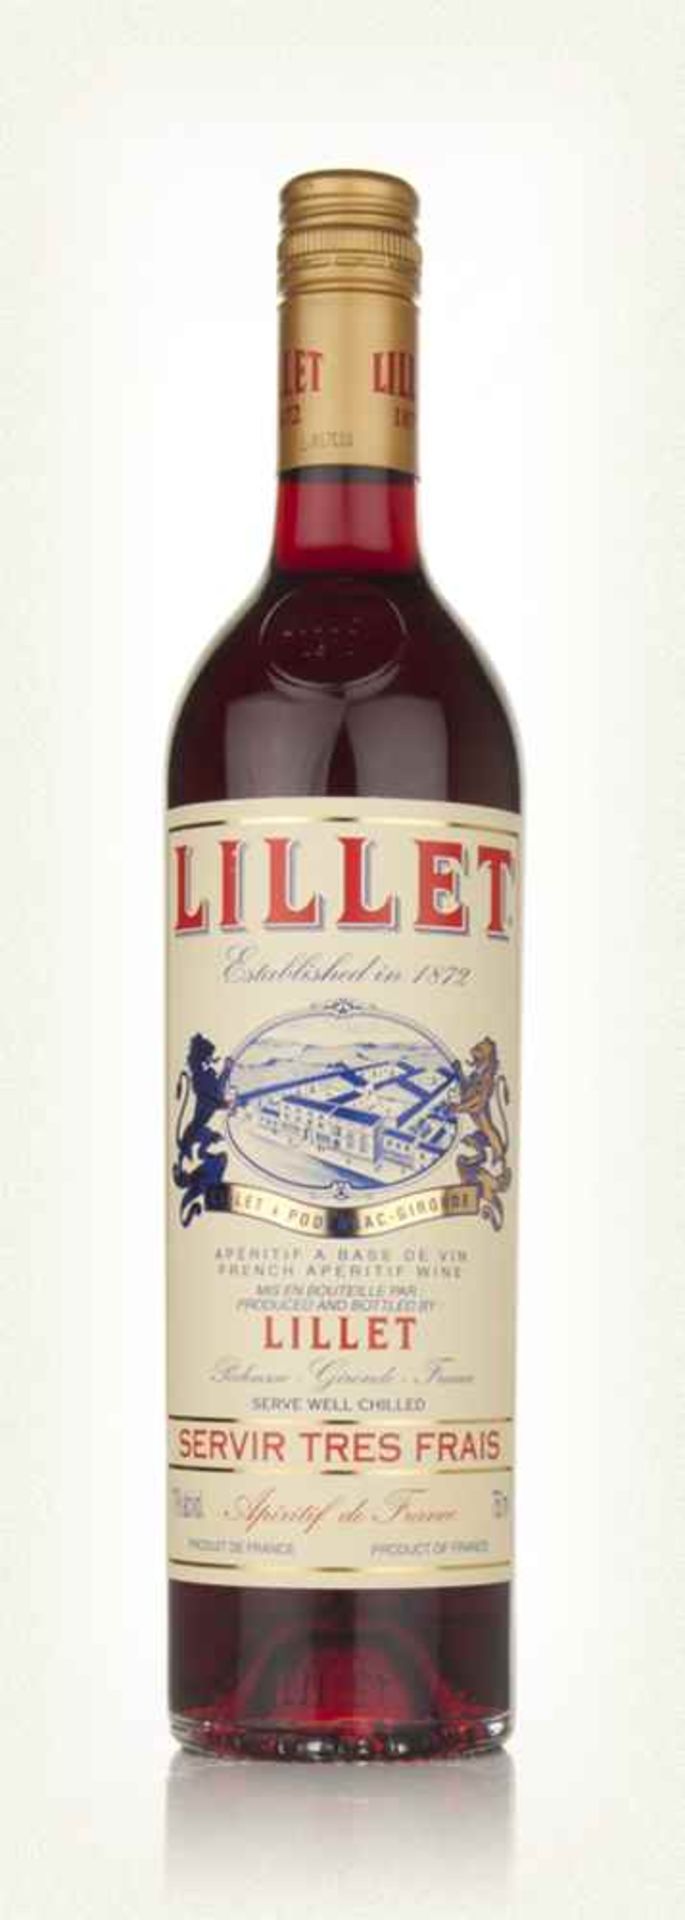 V Brand New Lillet Rouge 750ml Vermouth - Online Price £16.33 (Master of Malt)